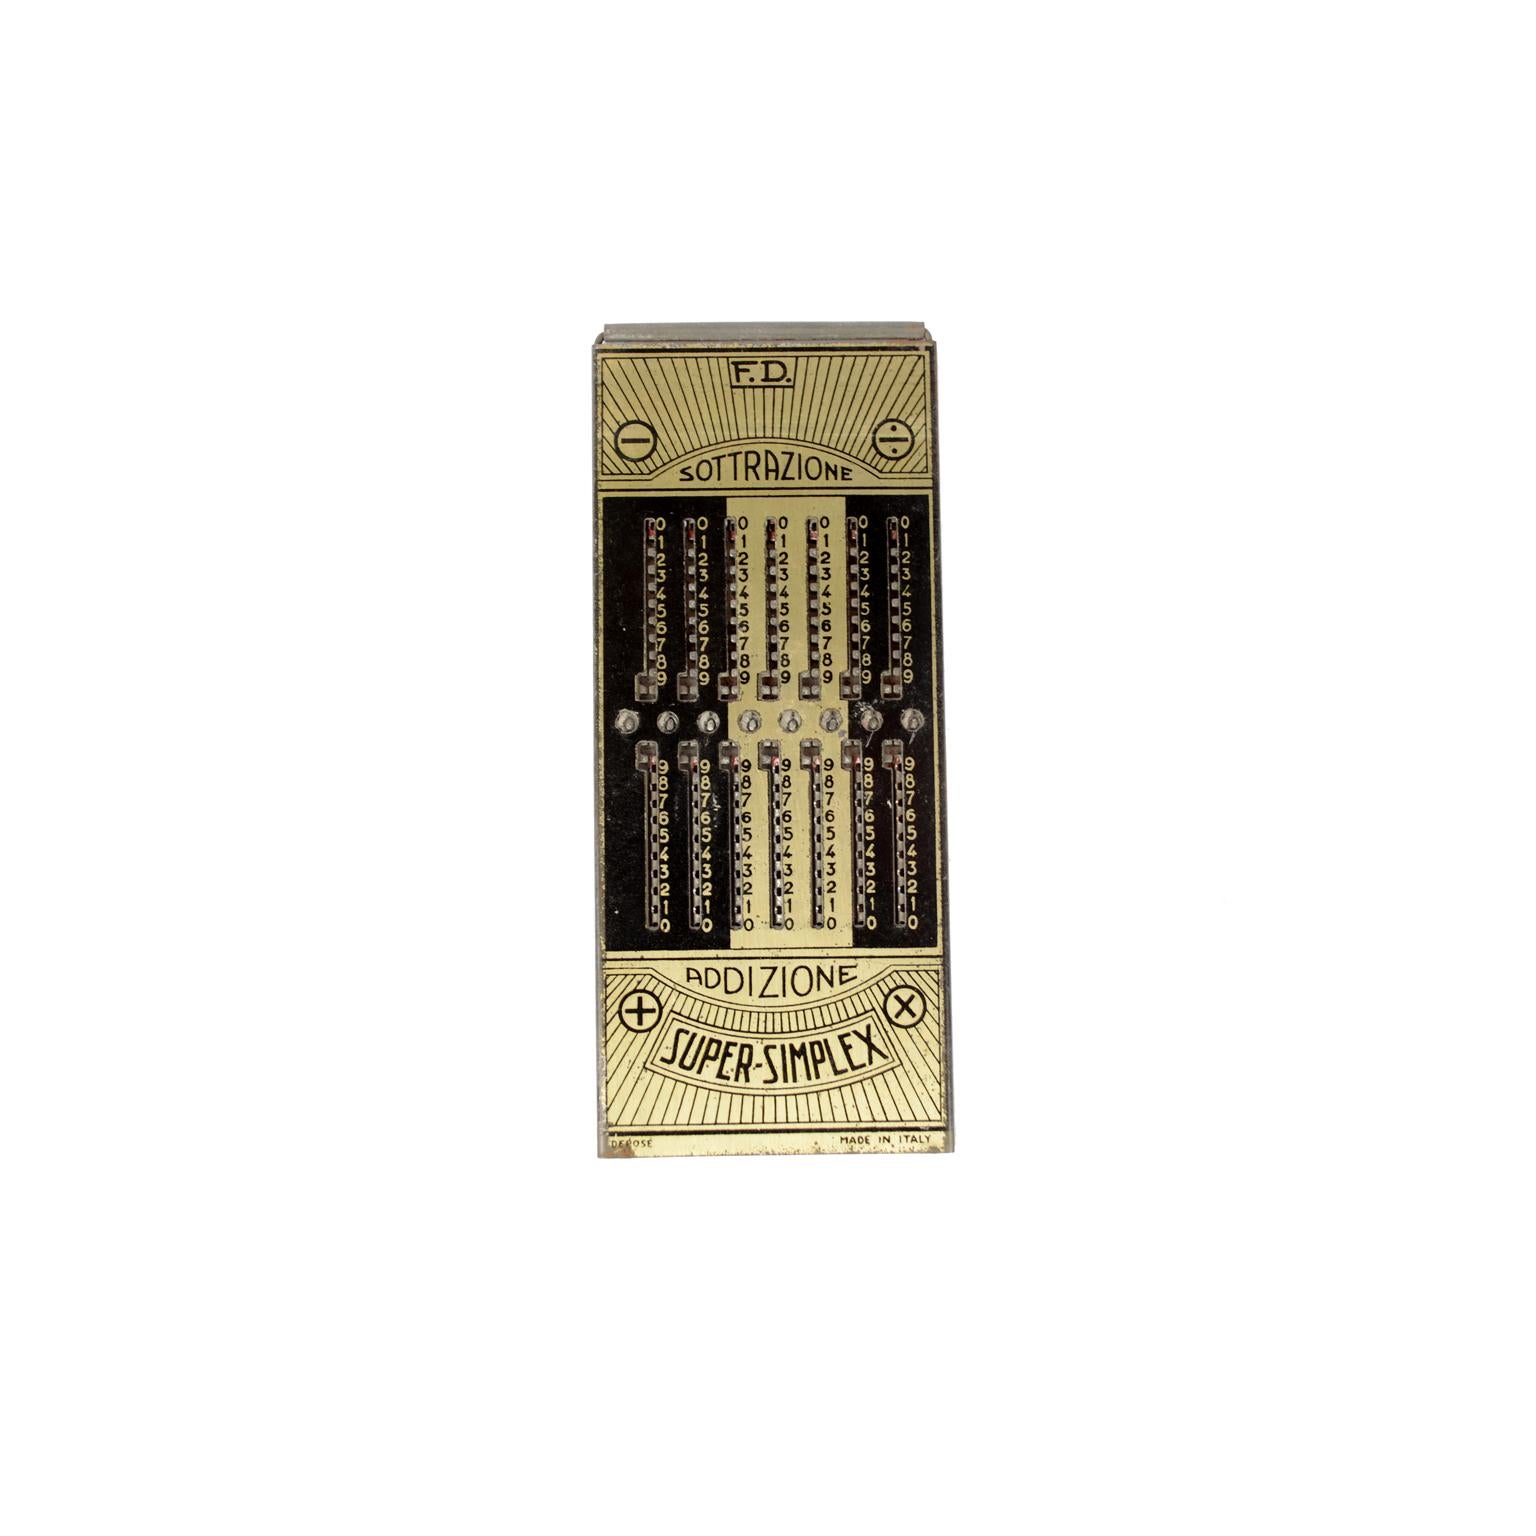 Super-Simplex Calculator Italian Manufacture of the 1920s 2